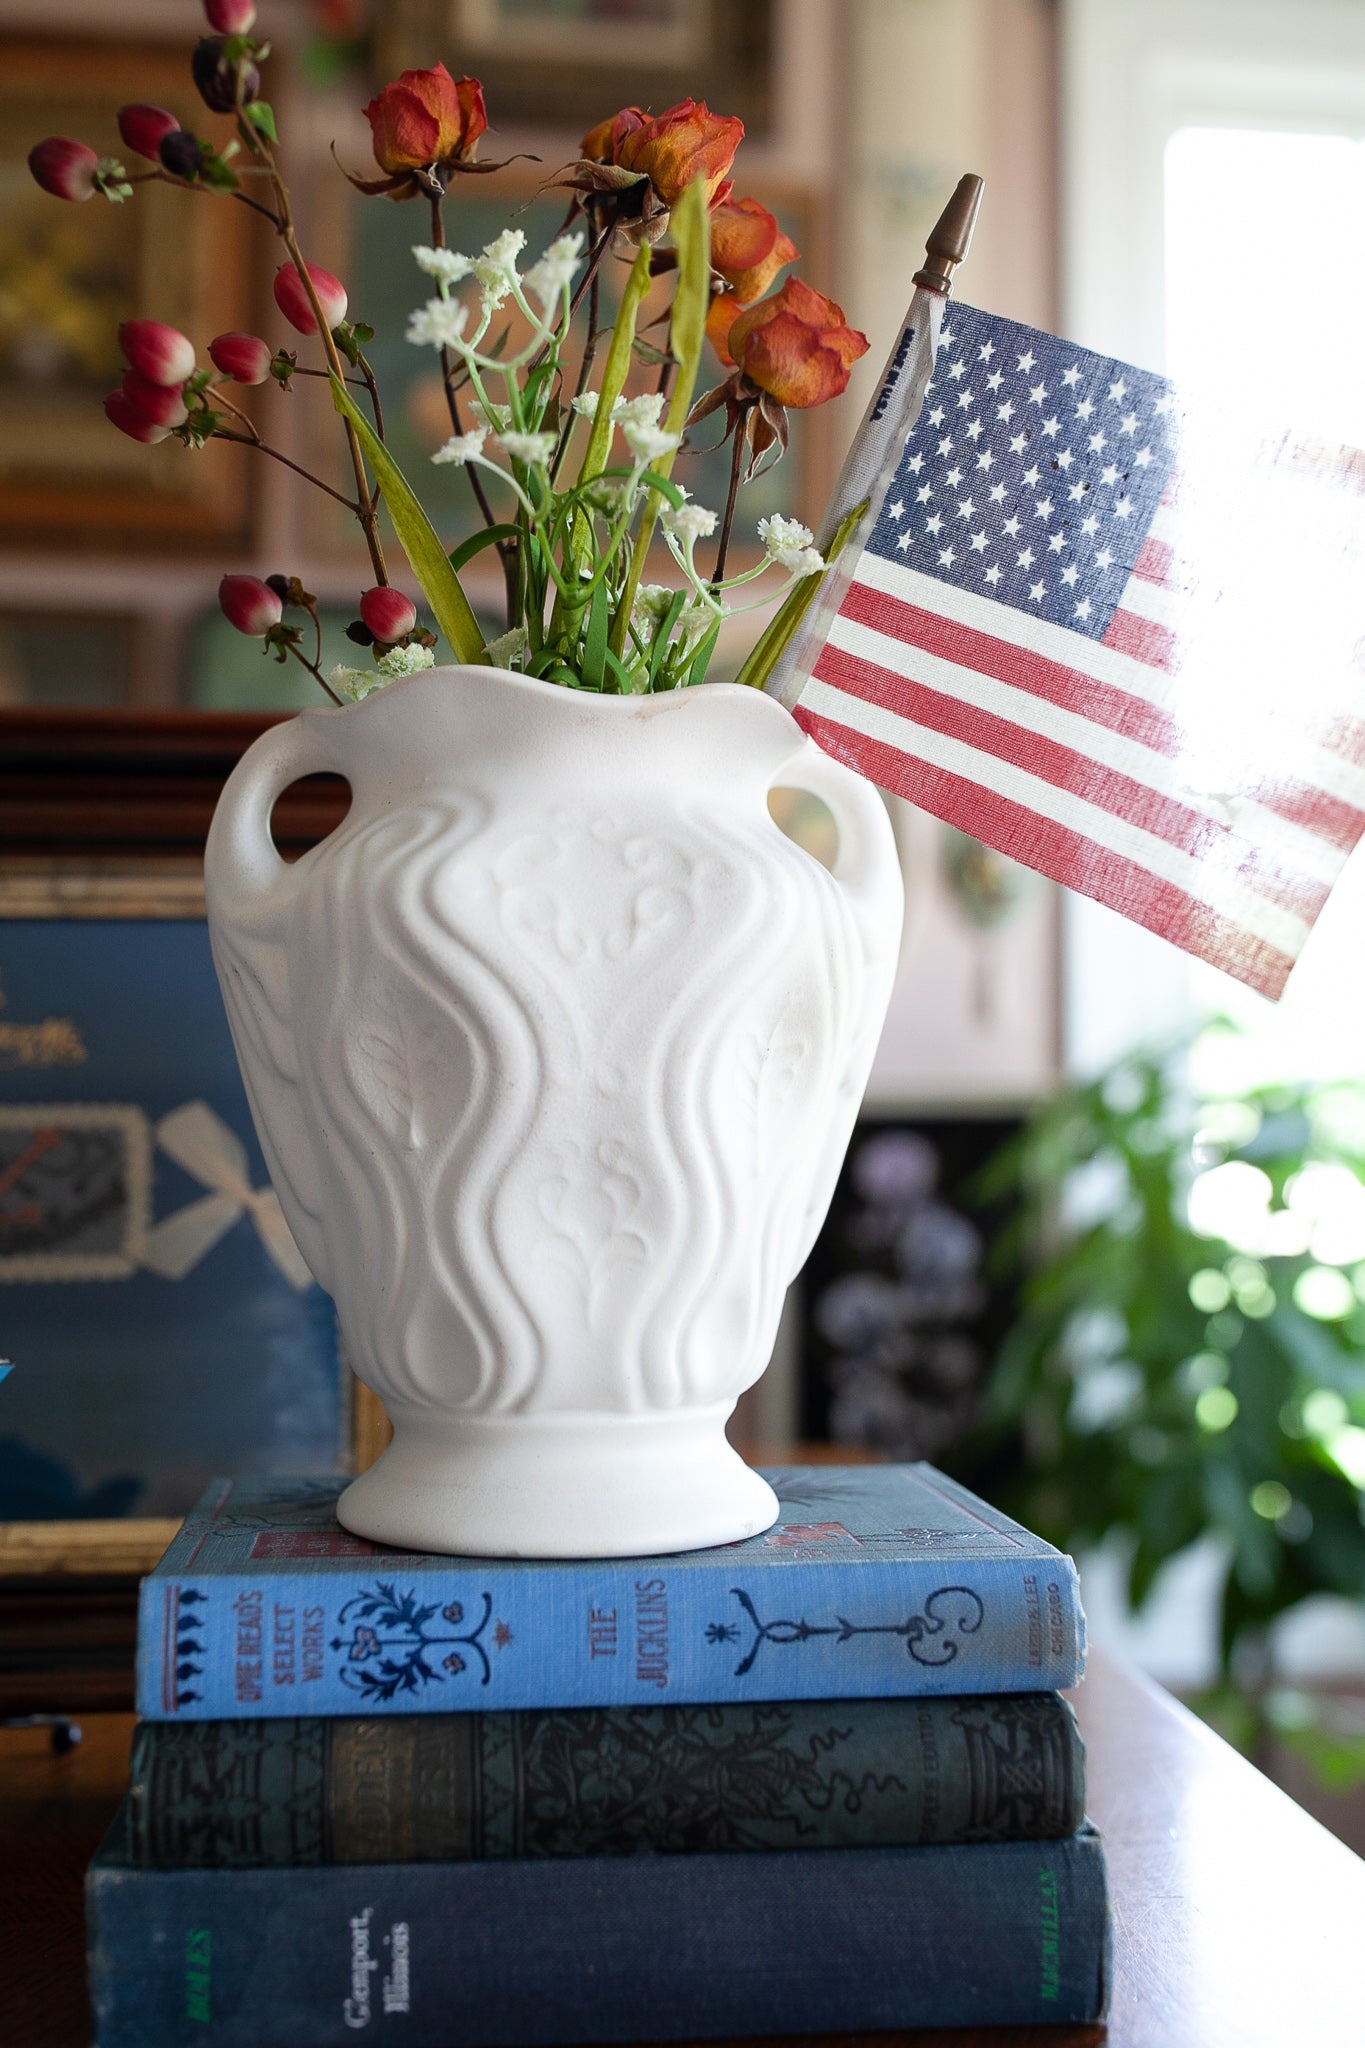 Vintage White Pottery Vase